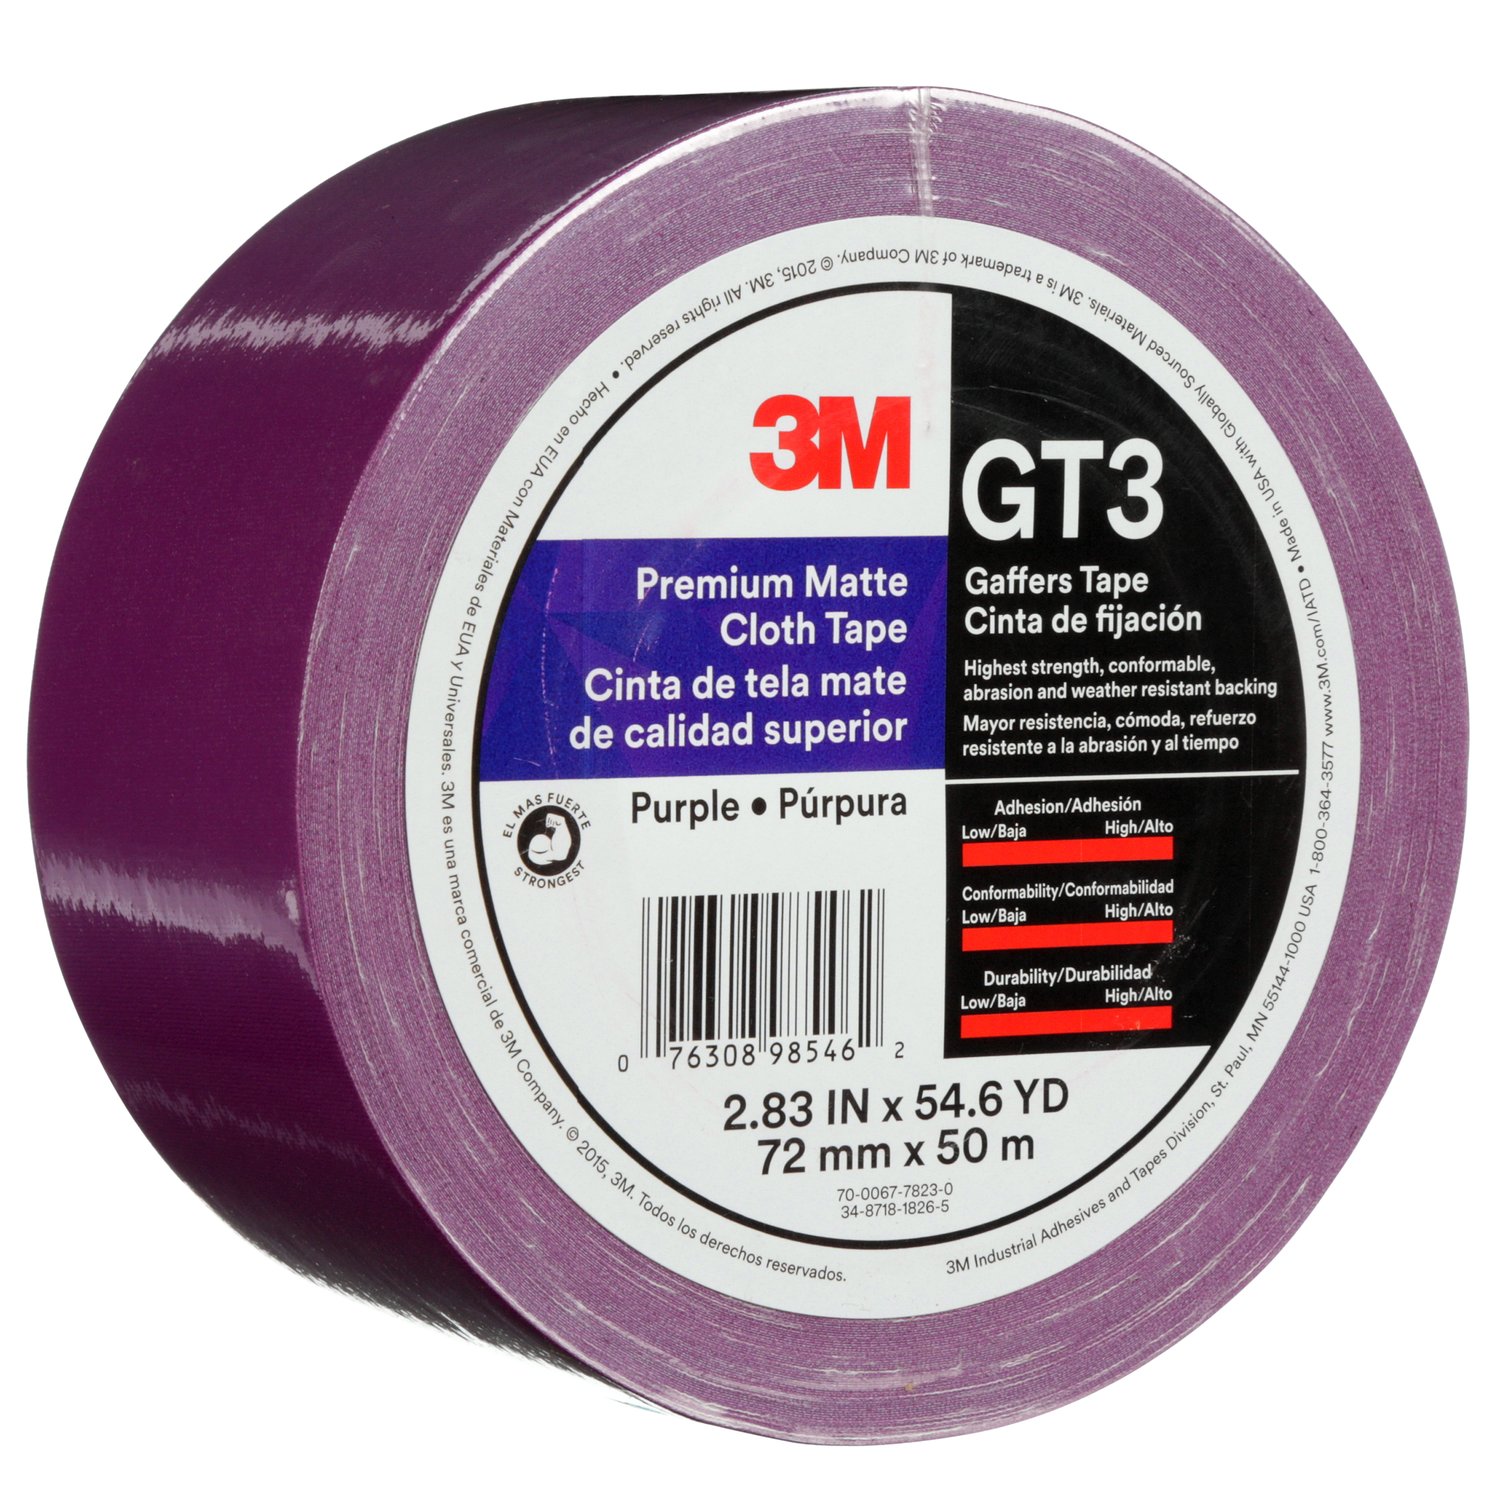 7010312520 - 3M Premium Matte Cloth (Gaffers) Tape GT3, Purple, 72 mm x 50 m, 11
mil, 16/Case